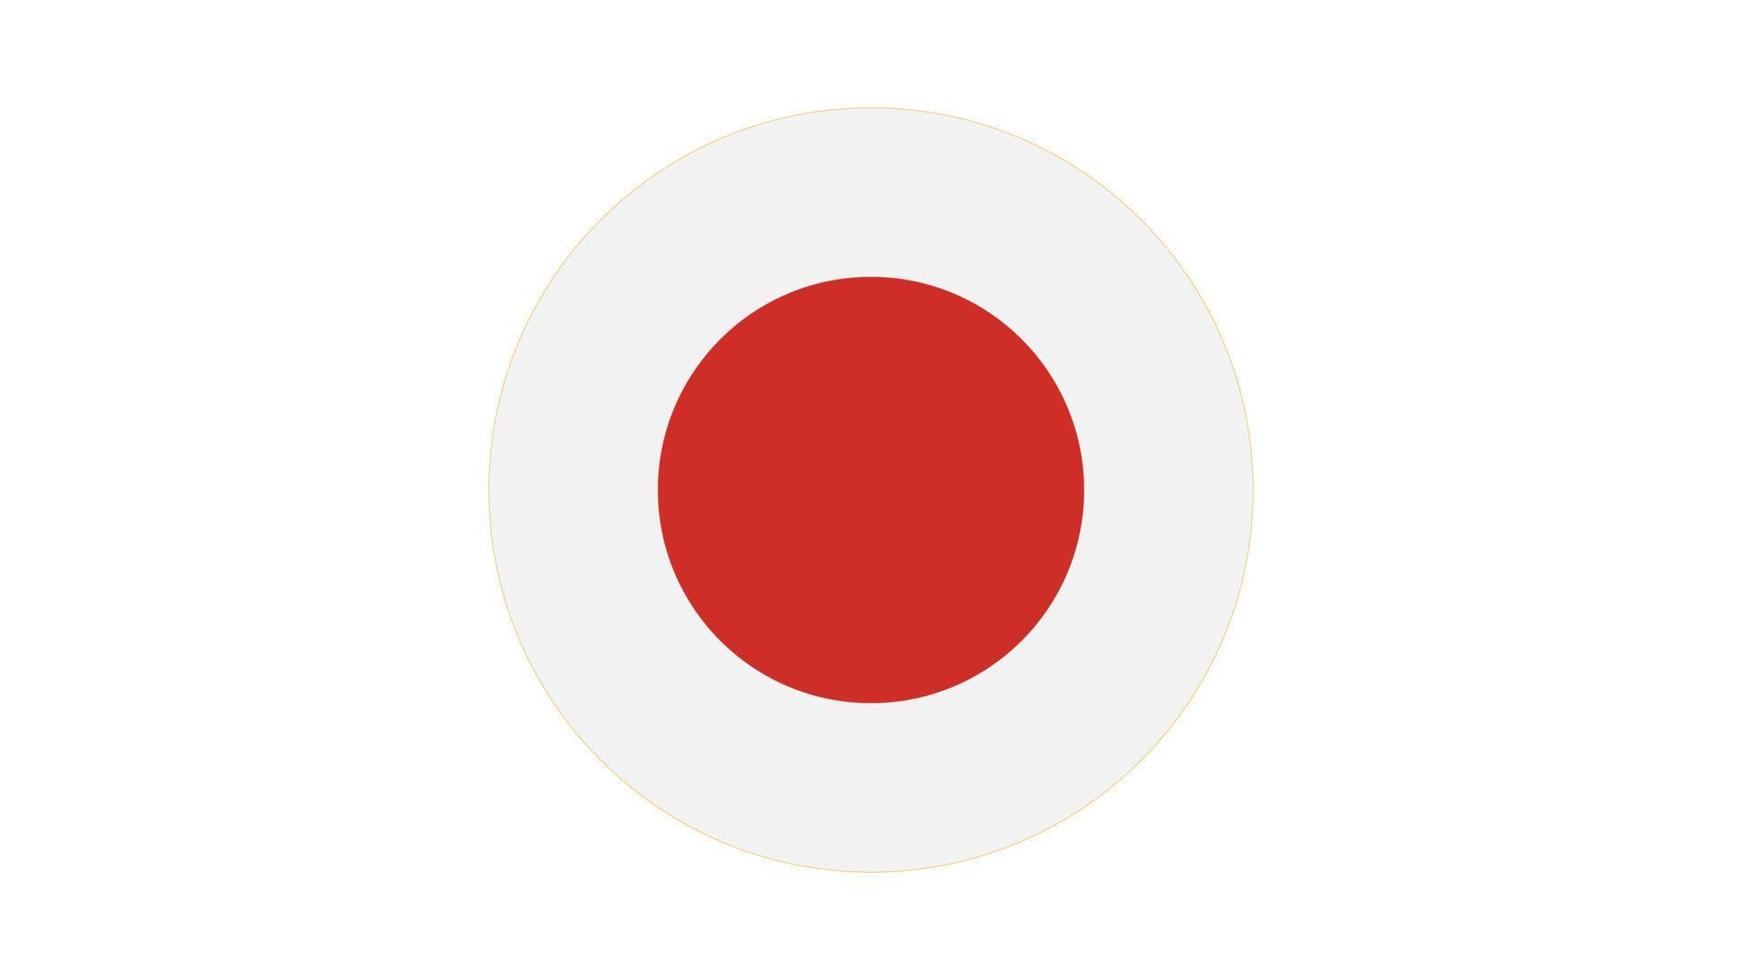 Japan flag circle, vector image and icon